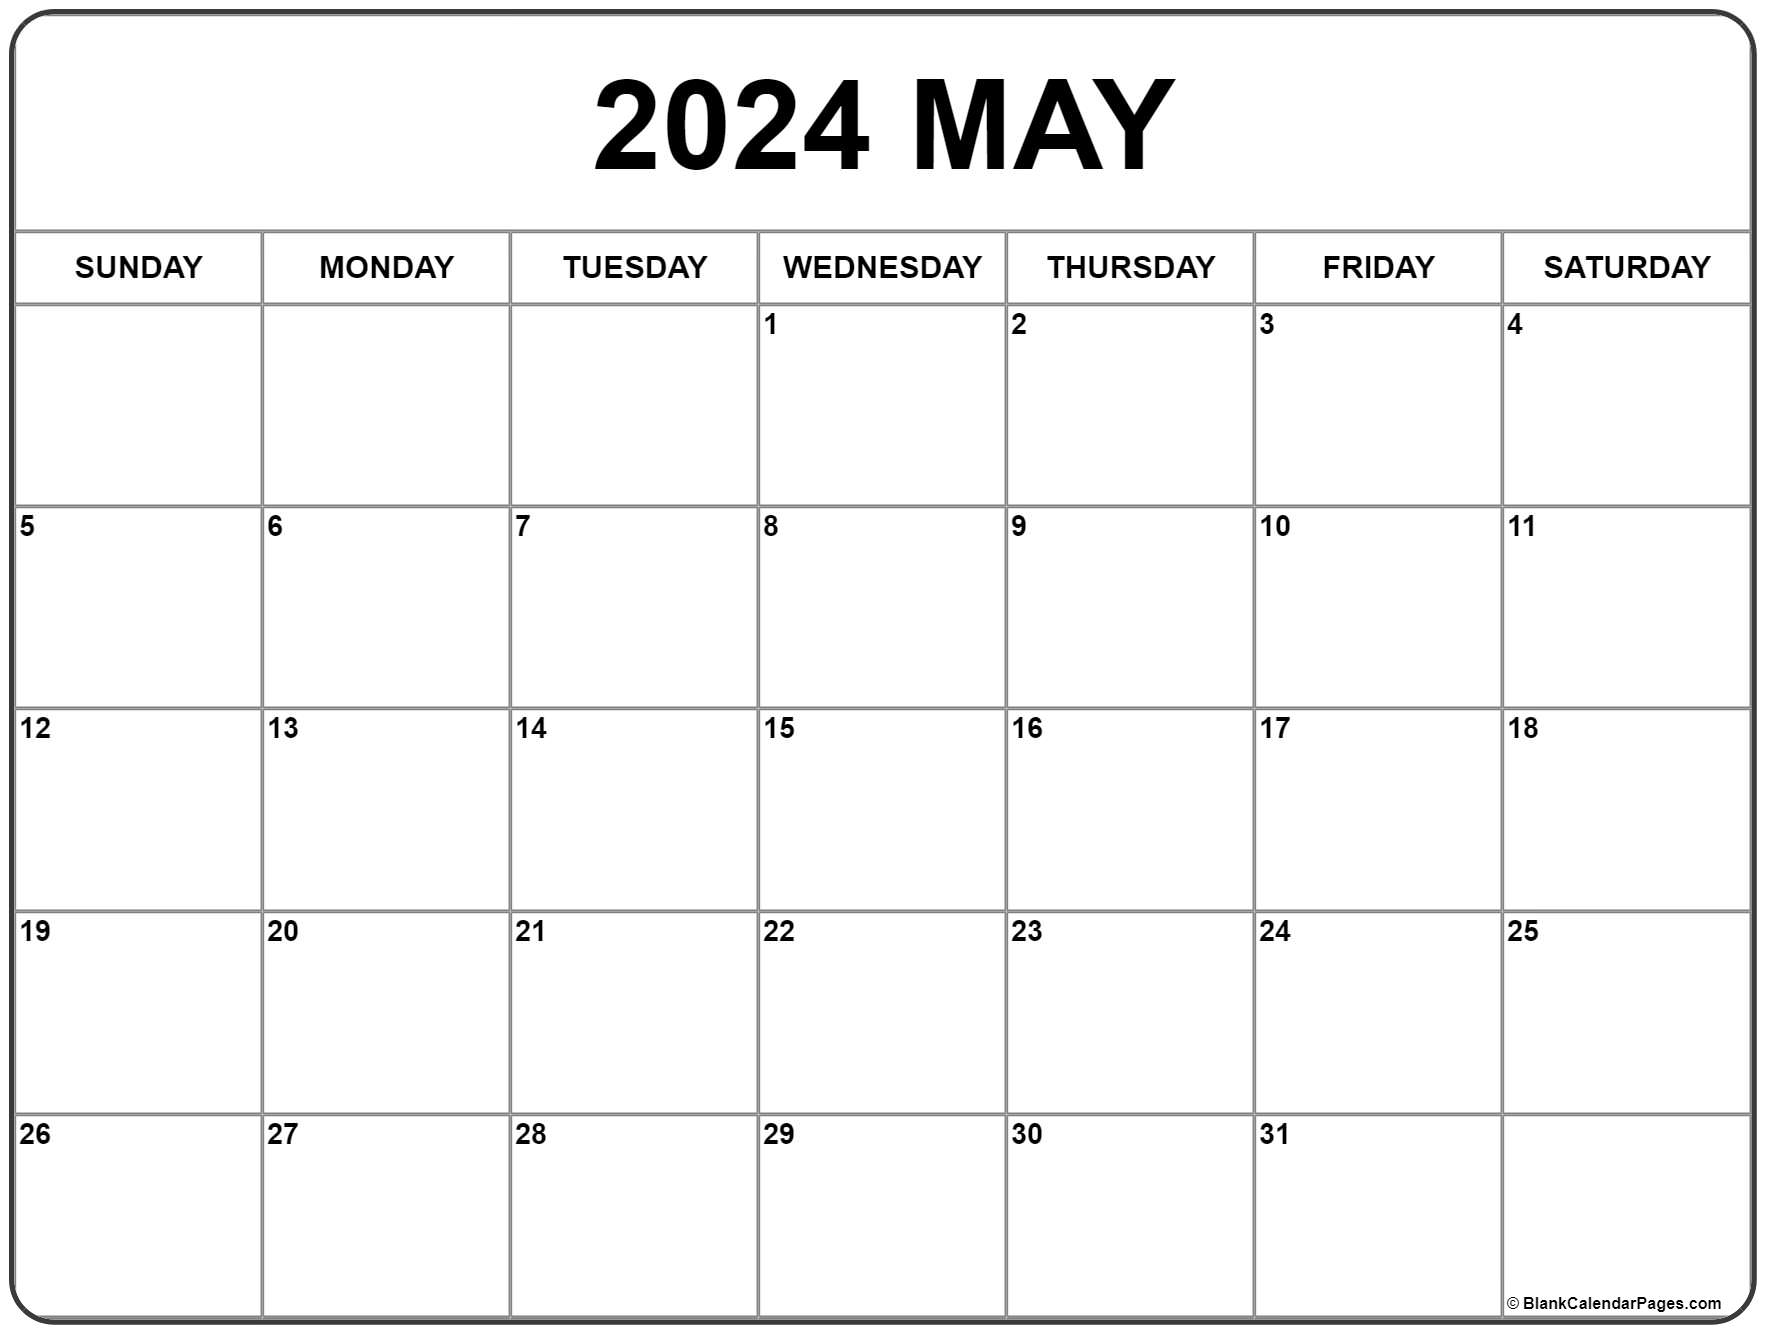 Calendar 2021 May May 2021 calendar | free printable monthly calendars